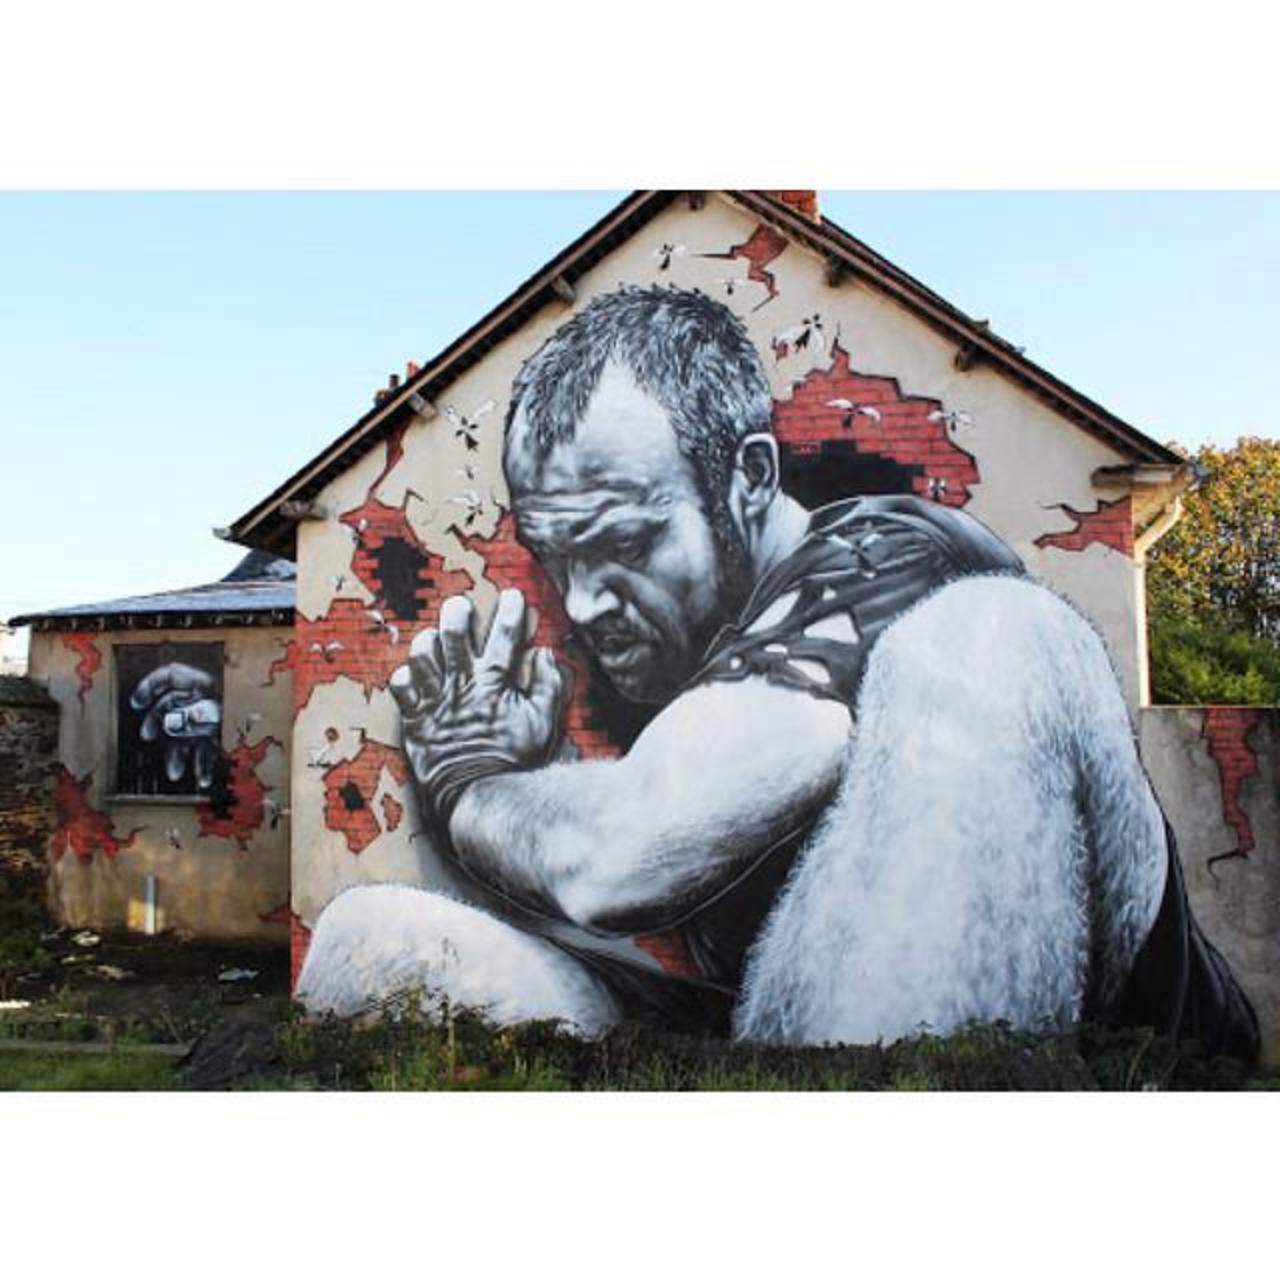 RT @jasonhalle: Love this #streetart #graffiti #art #MTO via @jaxxon and @jasonhalle http://t.co/BR2cQCU9vn